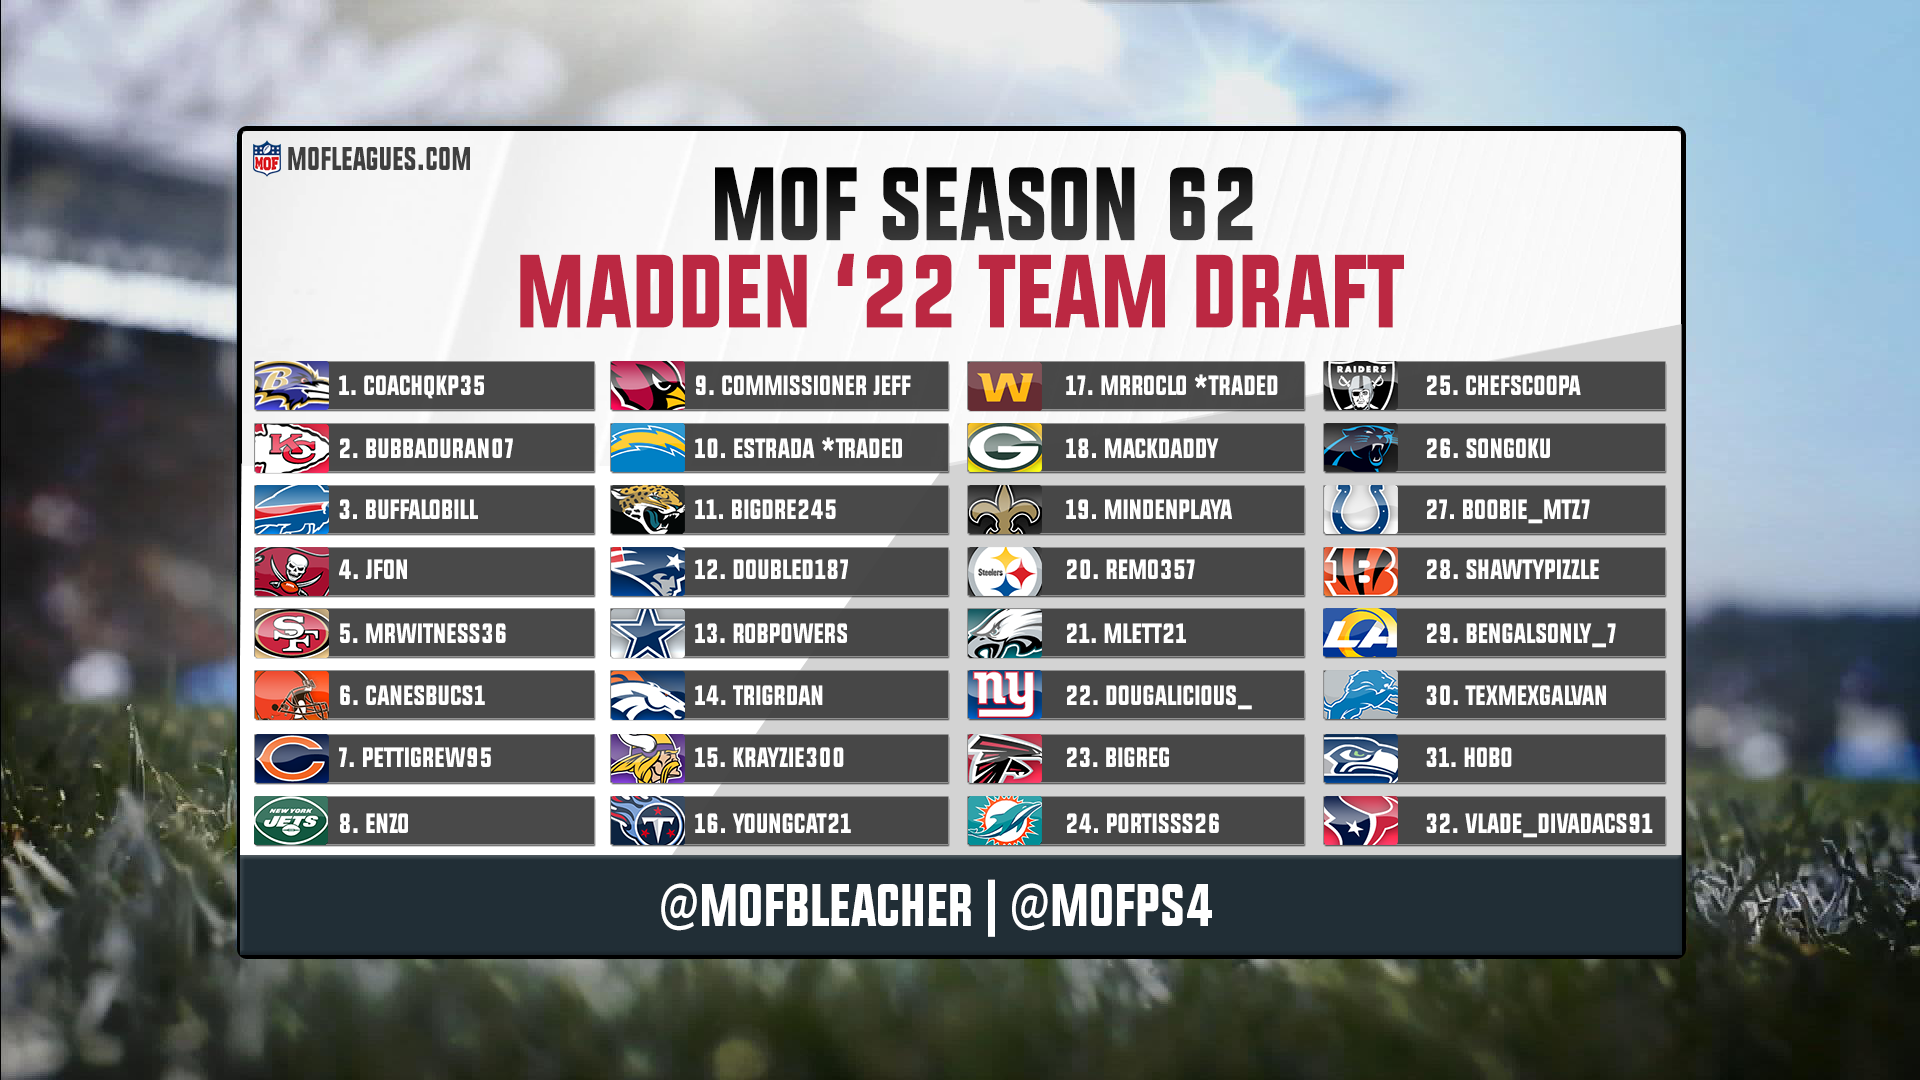 MOF Season 62 Team Draft